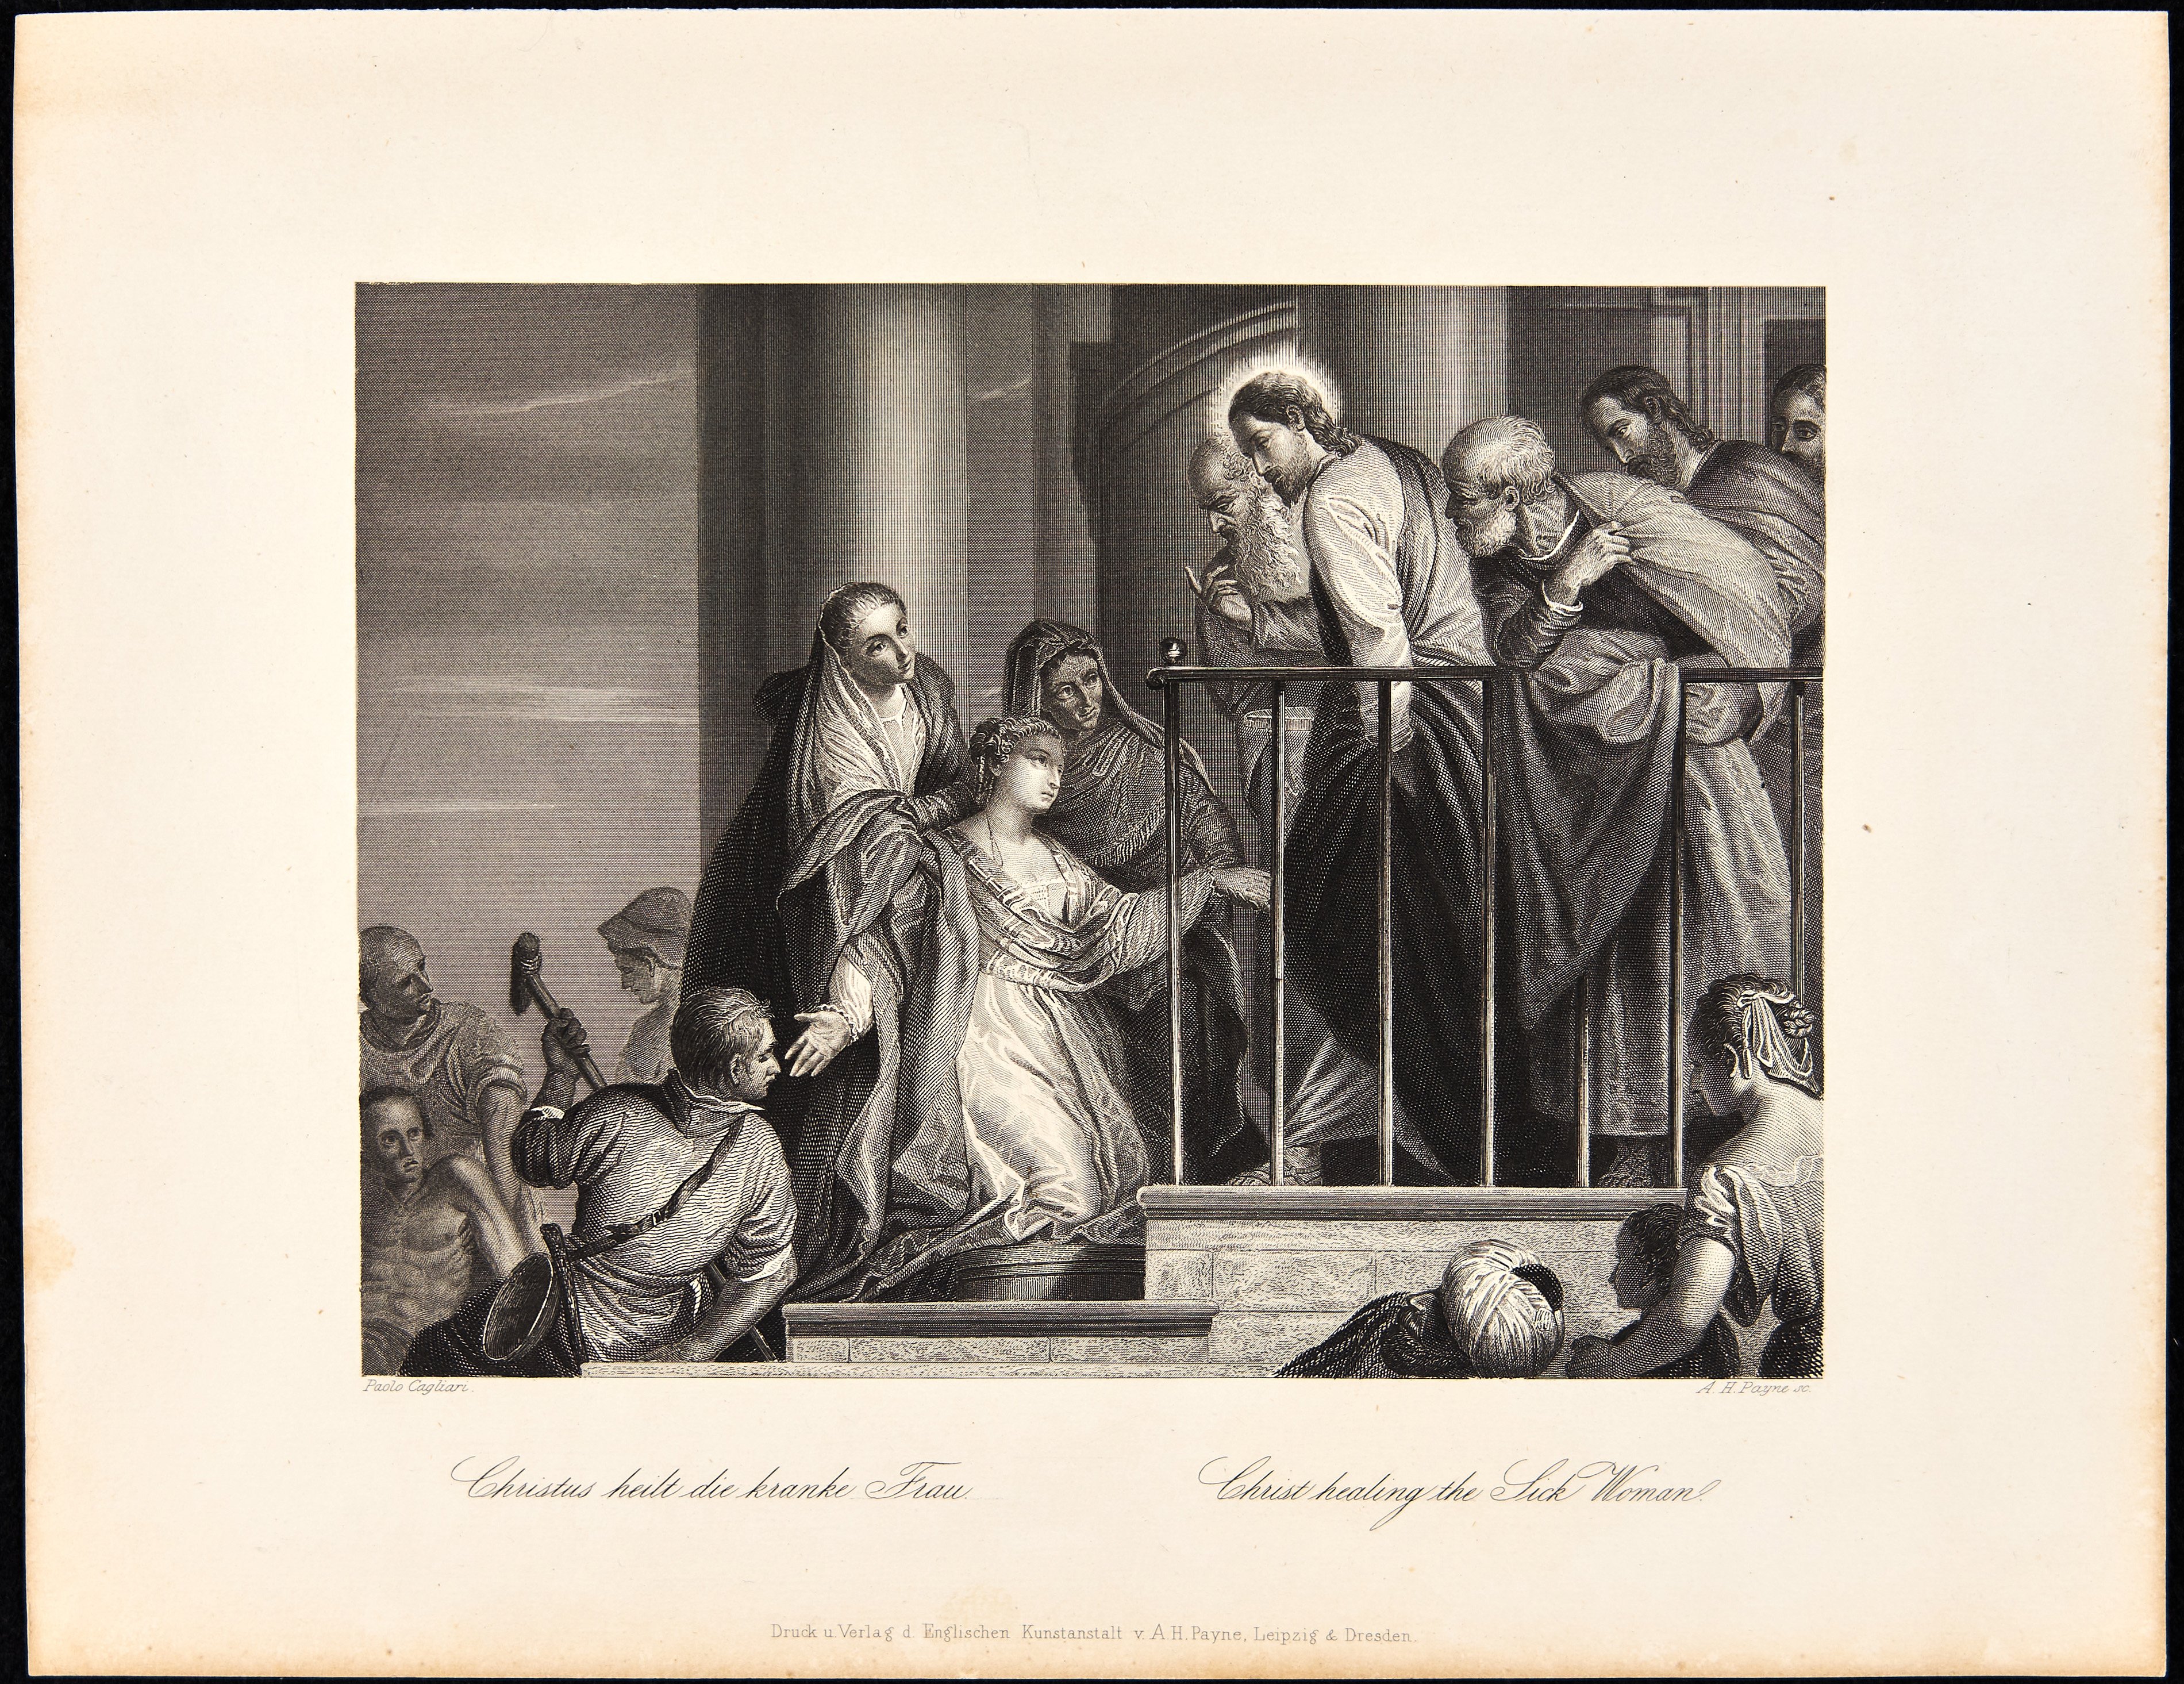 Christus heilt die kranke Frau, nach Paolo Veronese (Wilhelm-Fabry-Museum CC BY-NC-SA)